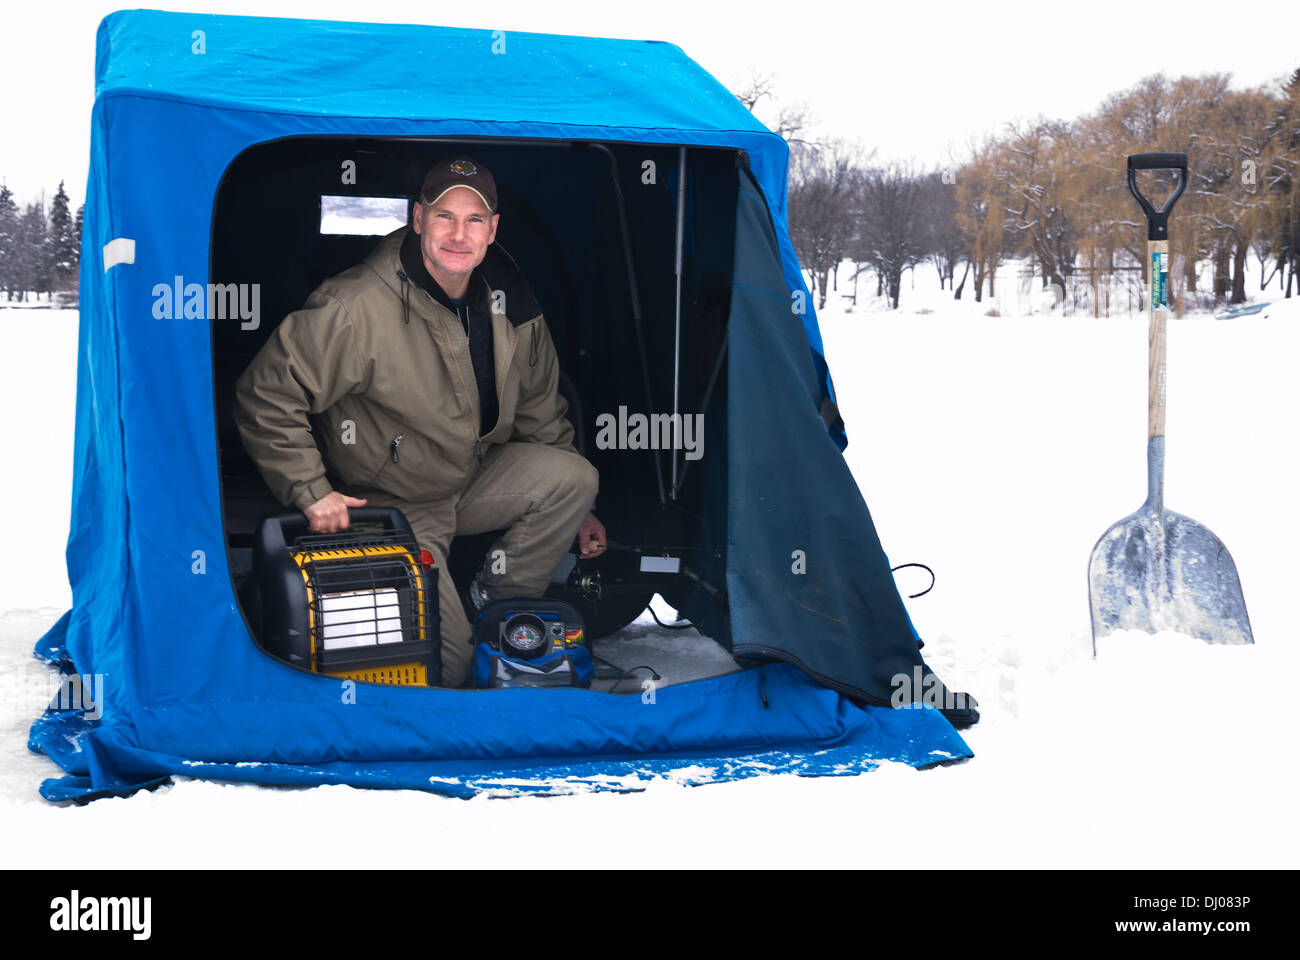 https://c8.alamy.com/comp/DJ083P/smiling-man-inside-his-ice-fishing-hut-on-a-frozen-lake-minneapolis-DJ083P.jpg